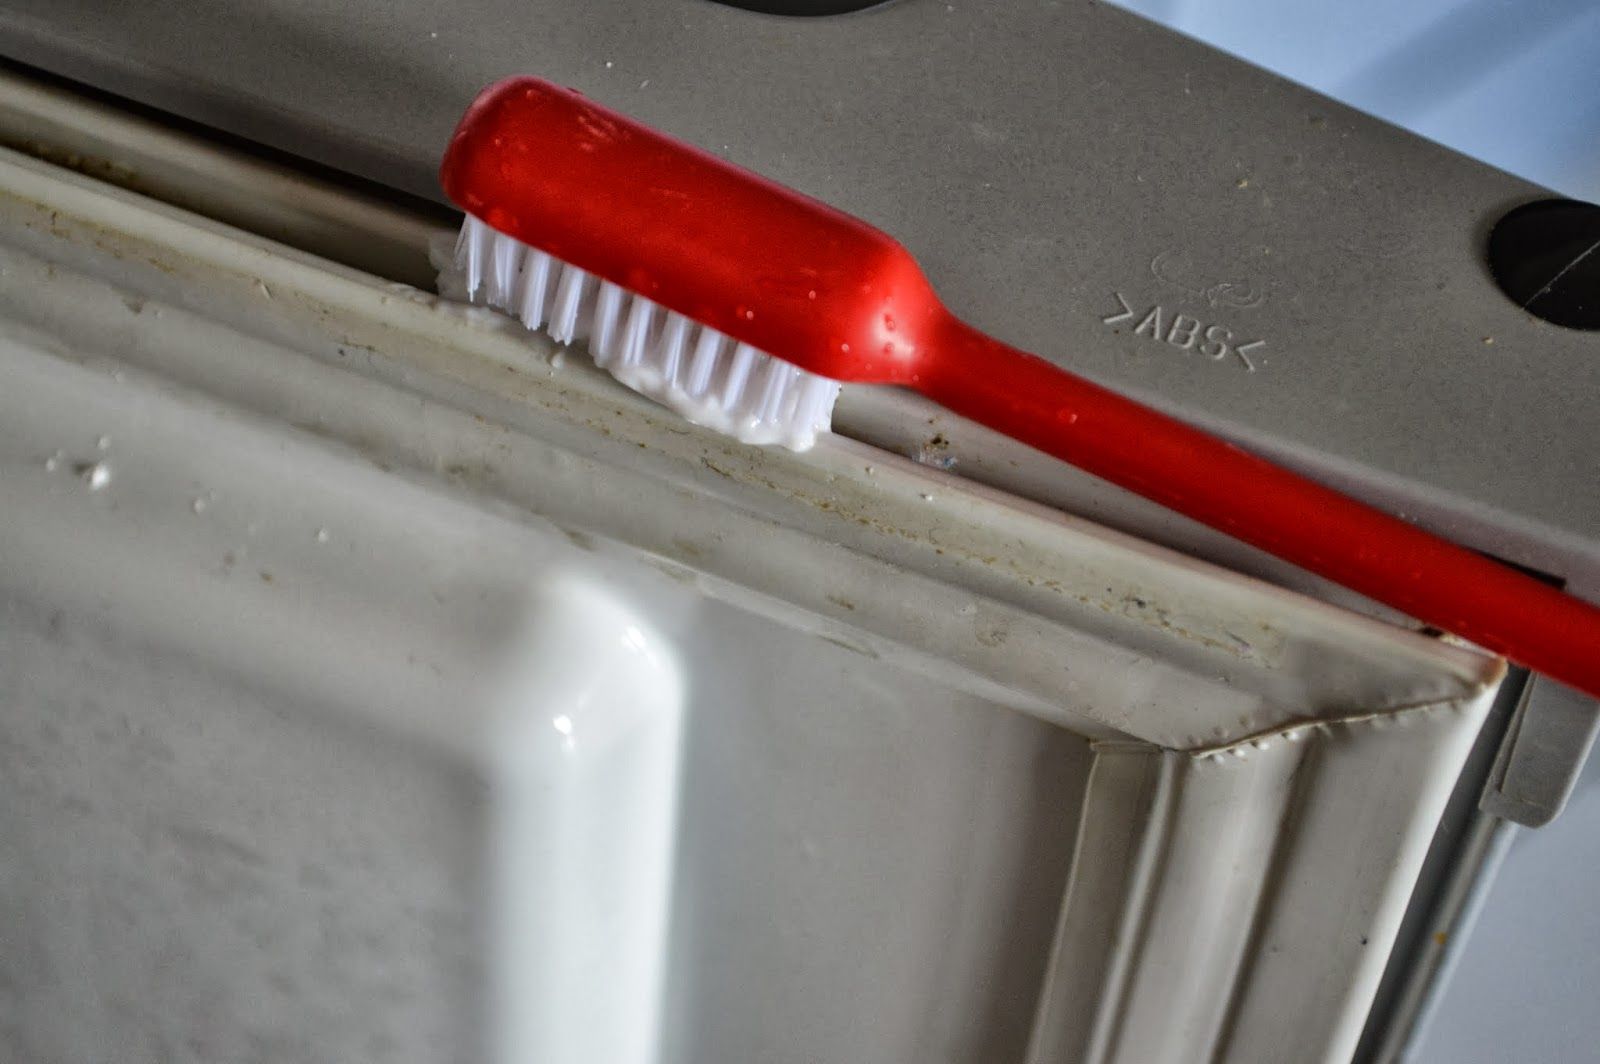 limpeza da borracha da geladeira com escova e pasta de dente